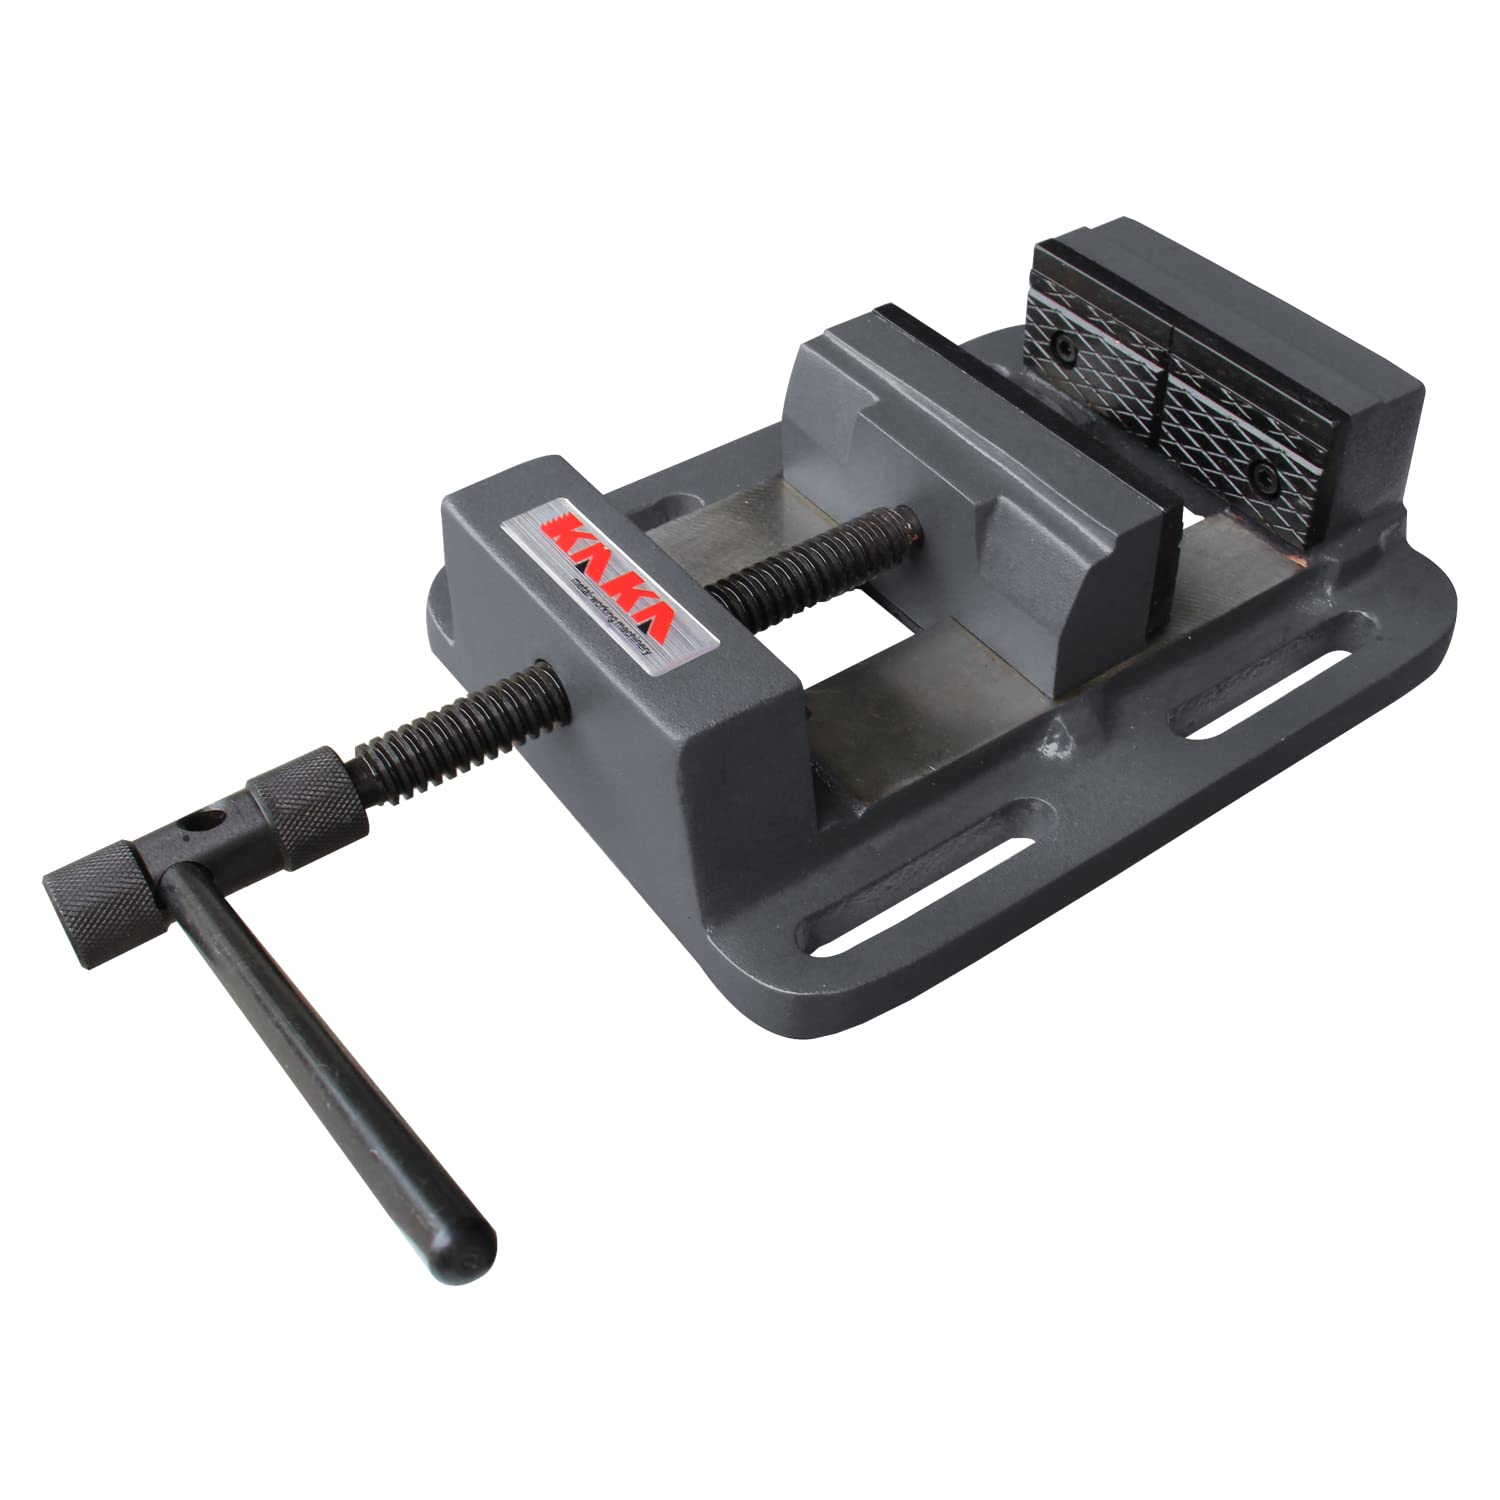 KANG Industrial BSM125 Drill Press Machine Vise, 125mm Precise